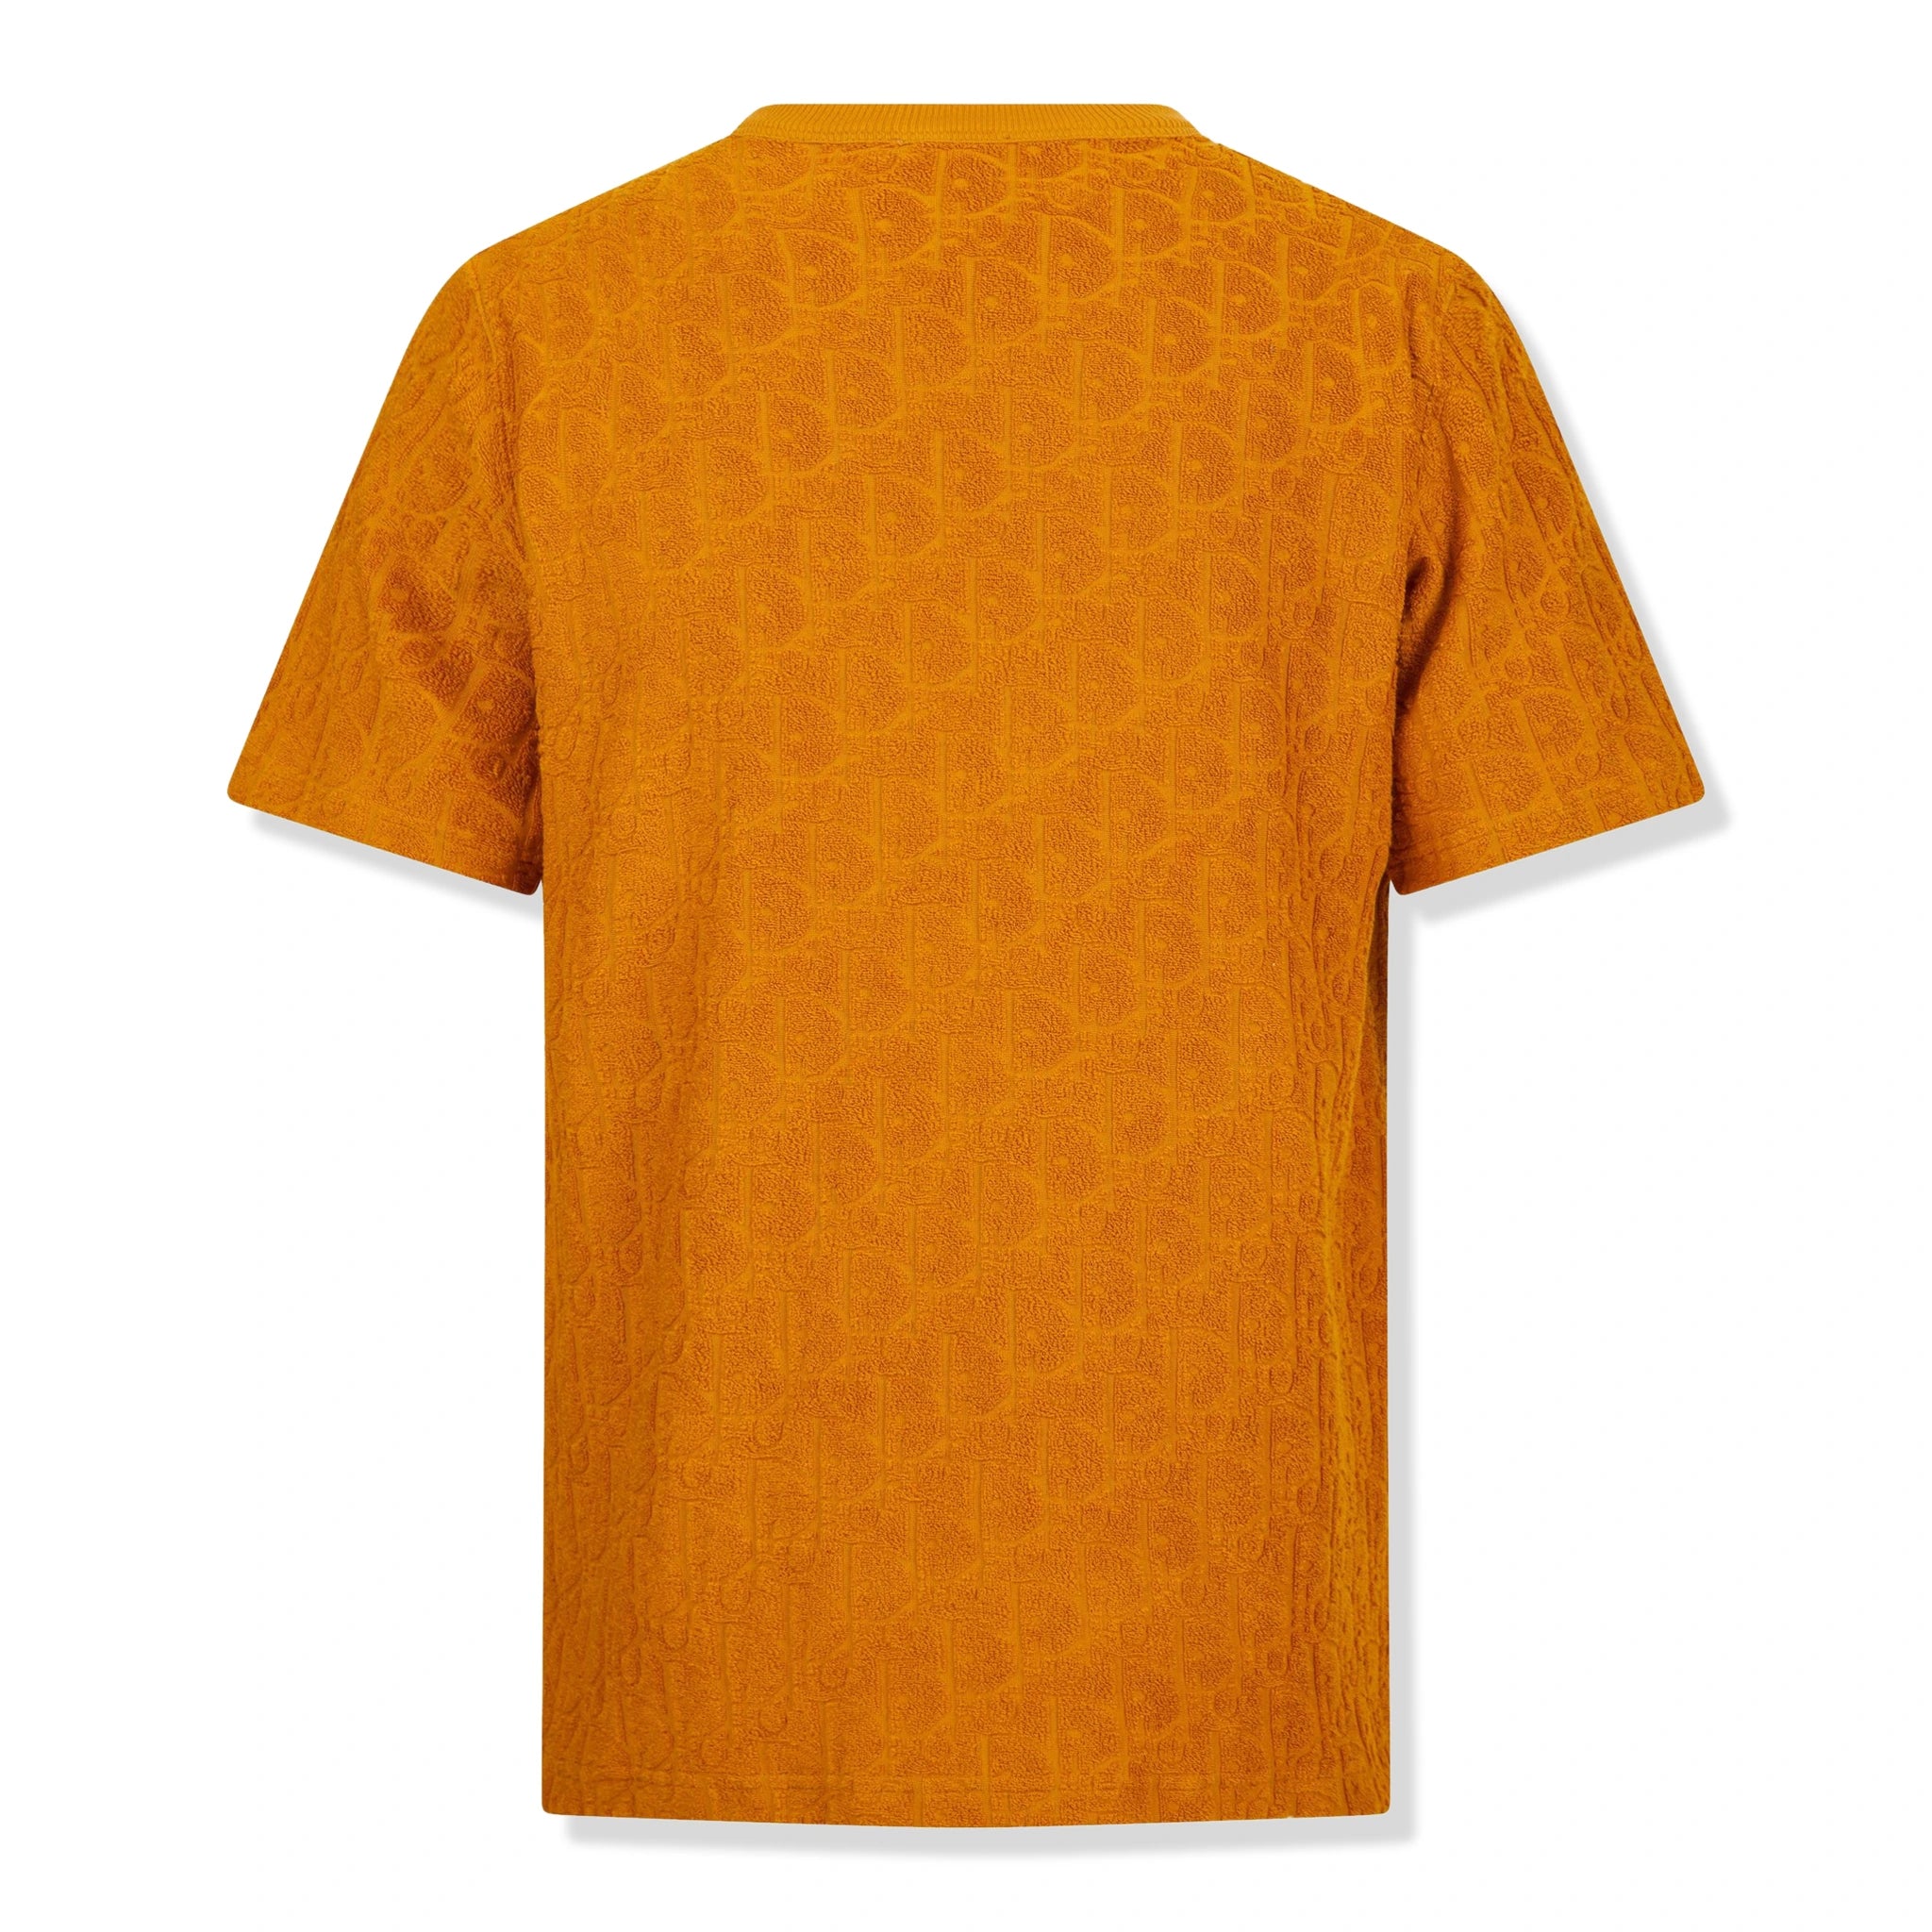 Back view of Dior Oblique Towelling Orange T Shirt